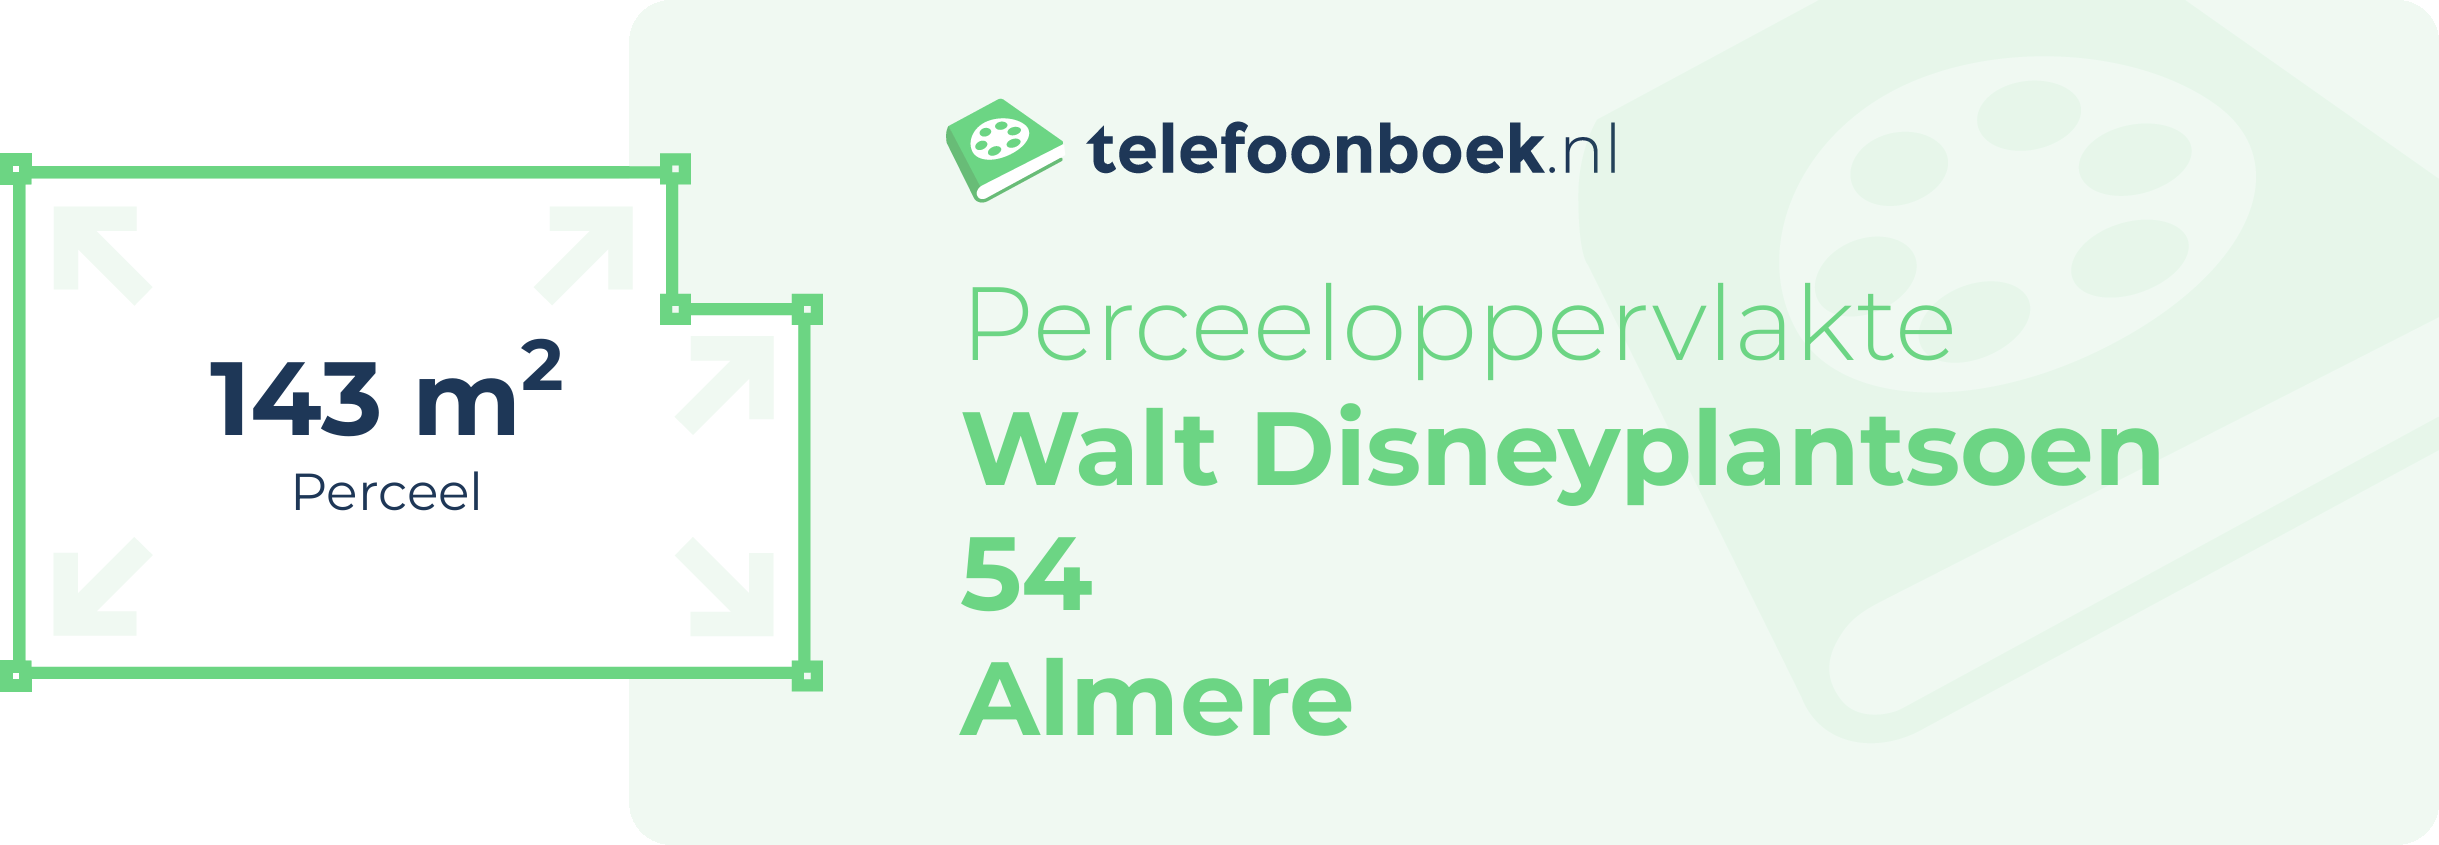 Perceeloppervlakte Walt Disneyplantsoen 54 Almere